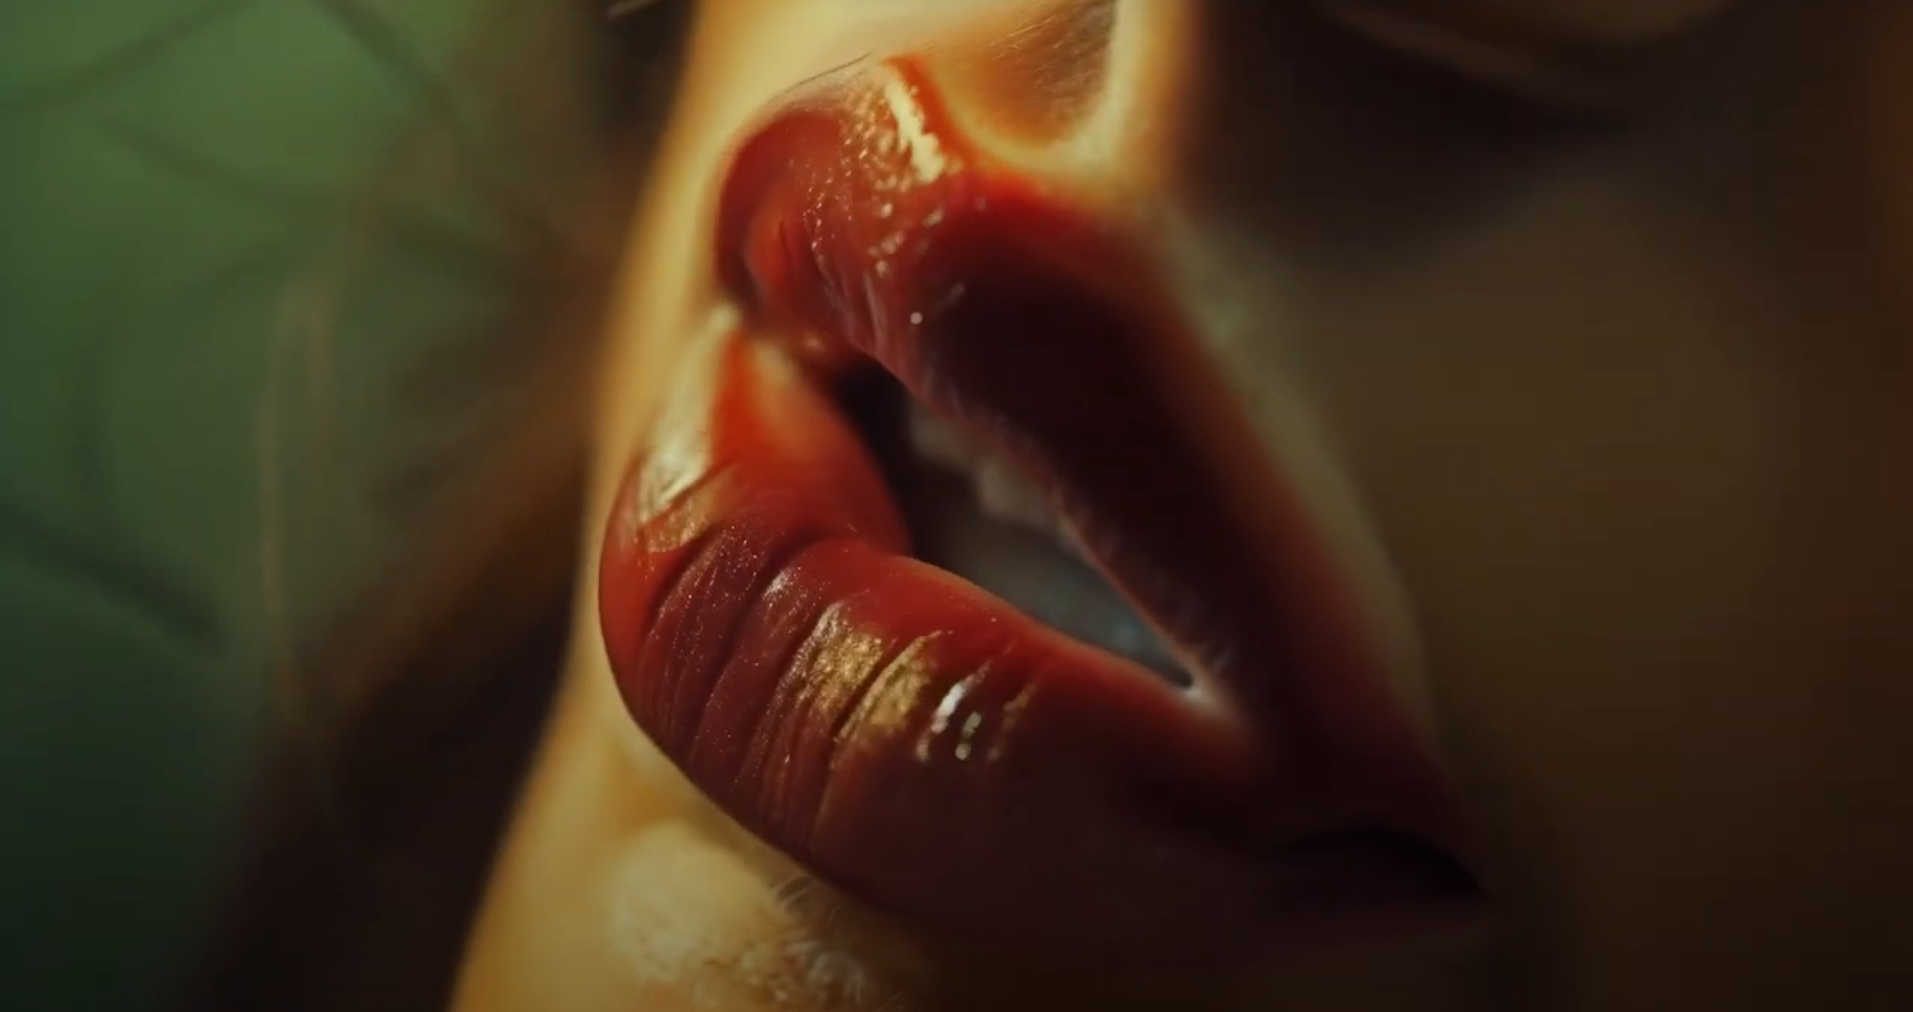 Pika erstellt ab sofort Ki-Videoclips mit synchronen Lippen mittels Lip Sync